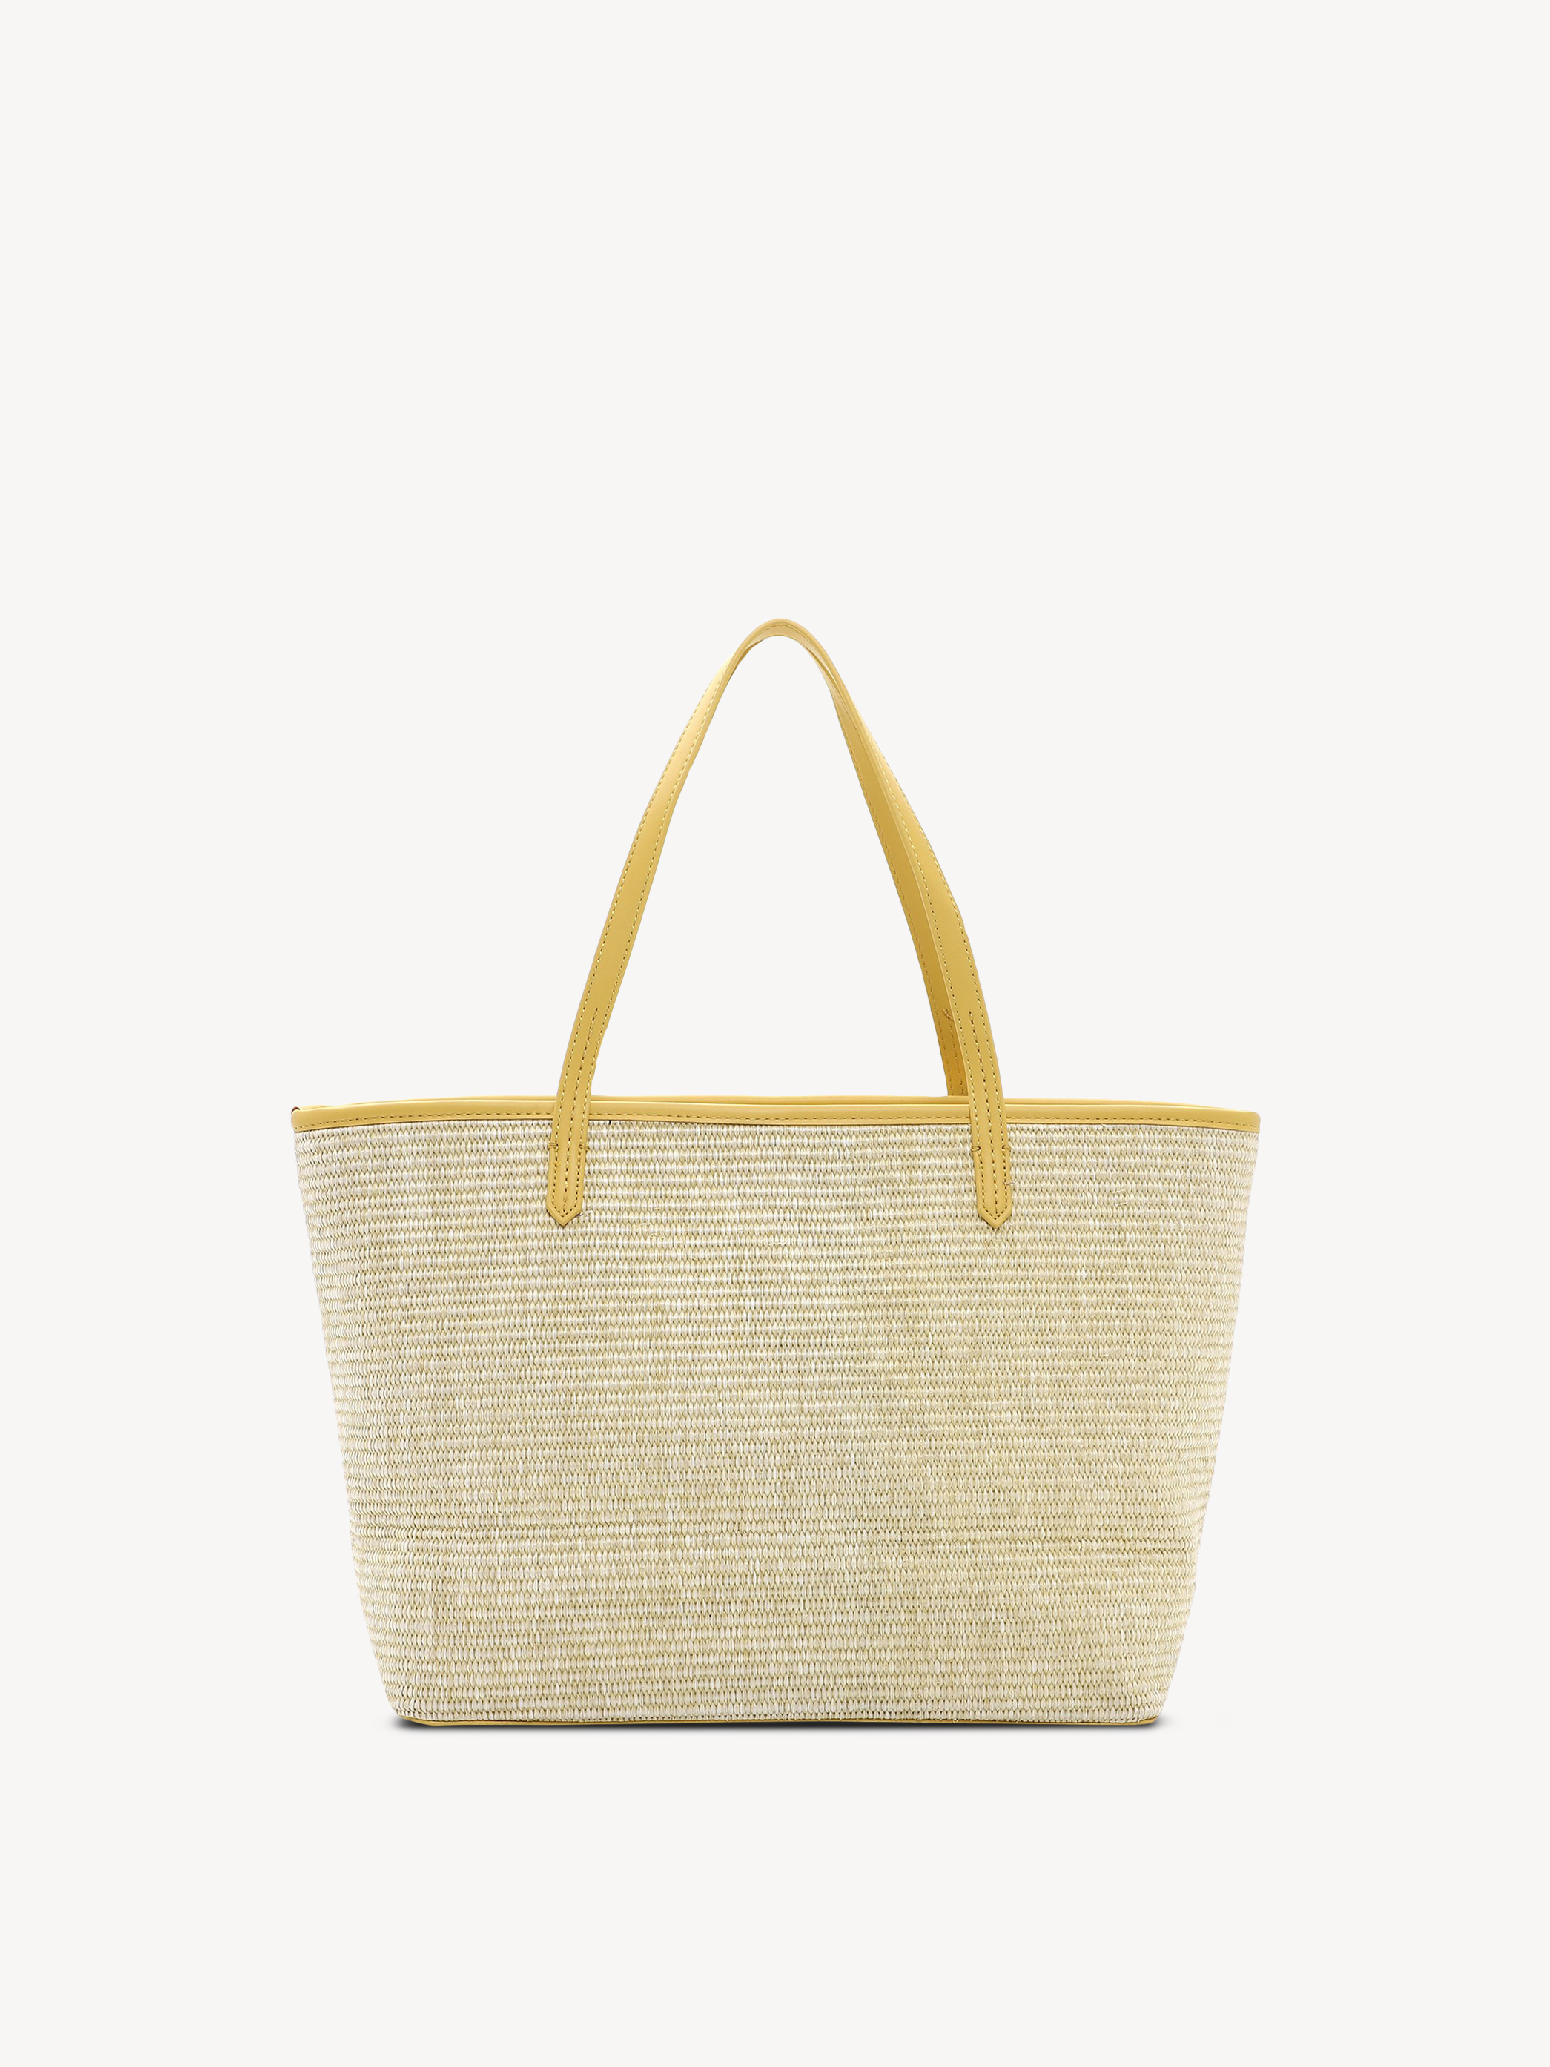 Shopping bag - yellow, lightyellow, hi-res